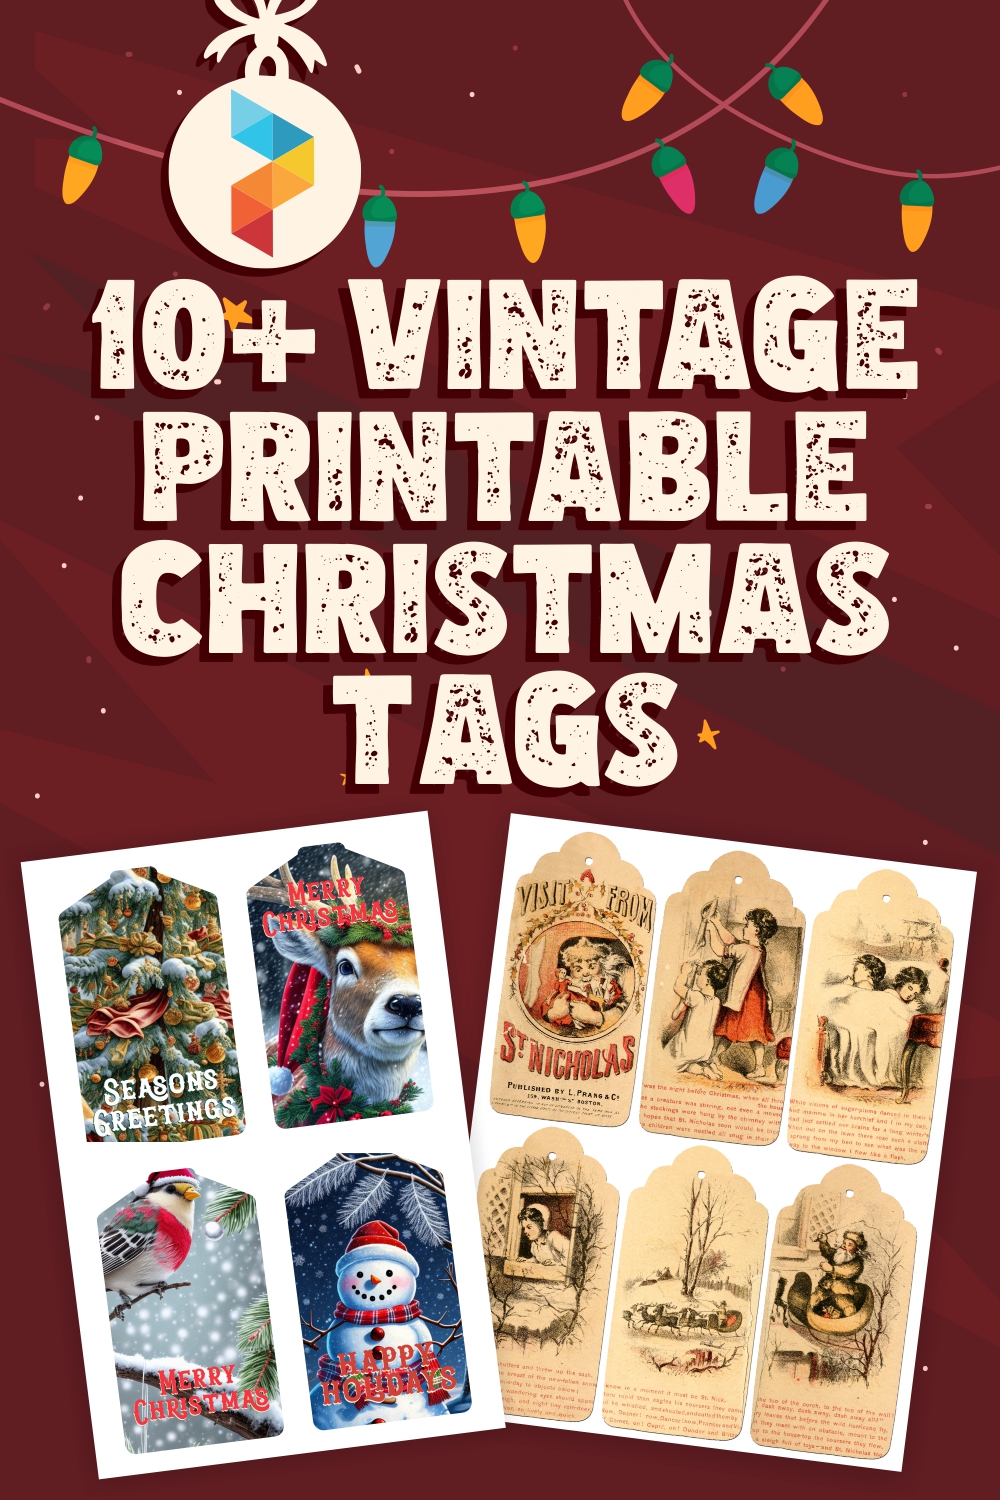 Vintage Ben Mont Christmas Wrapping Paper MERRY CHRISTMAS on Red Vintage  Christmas Gift Wrap One Flat Sheet